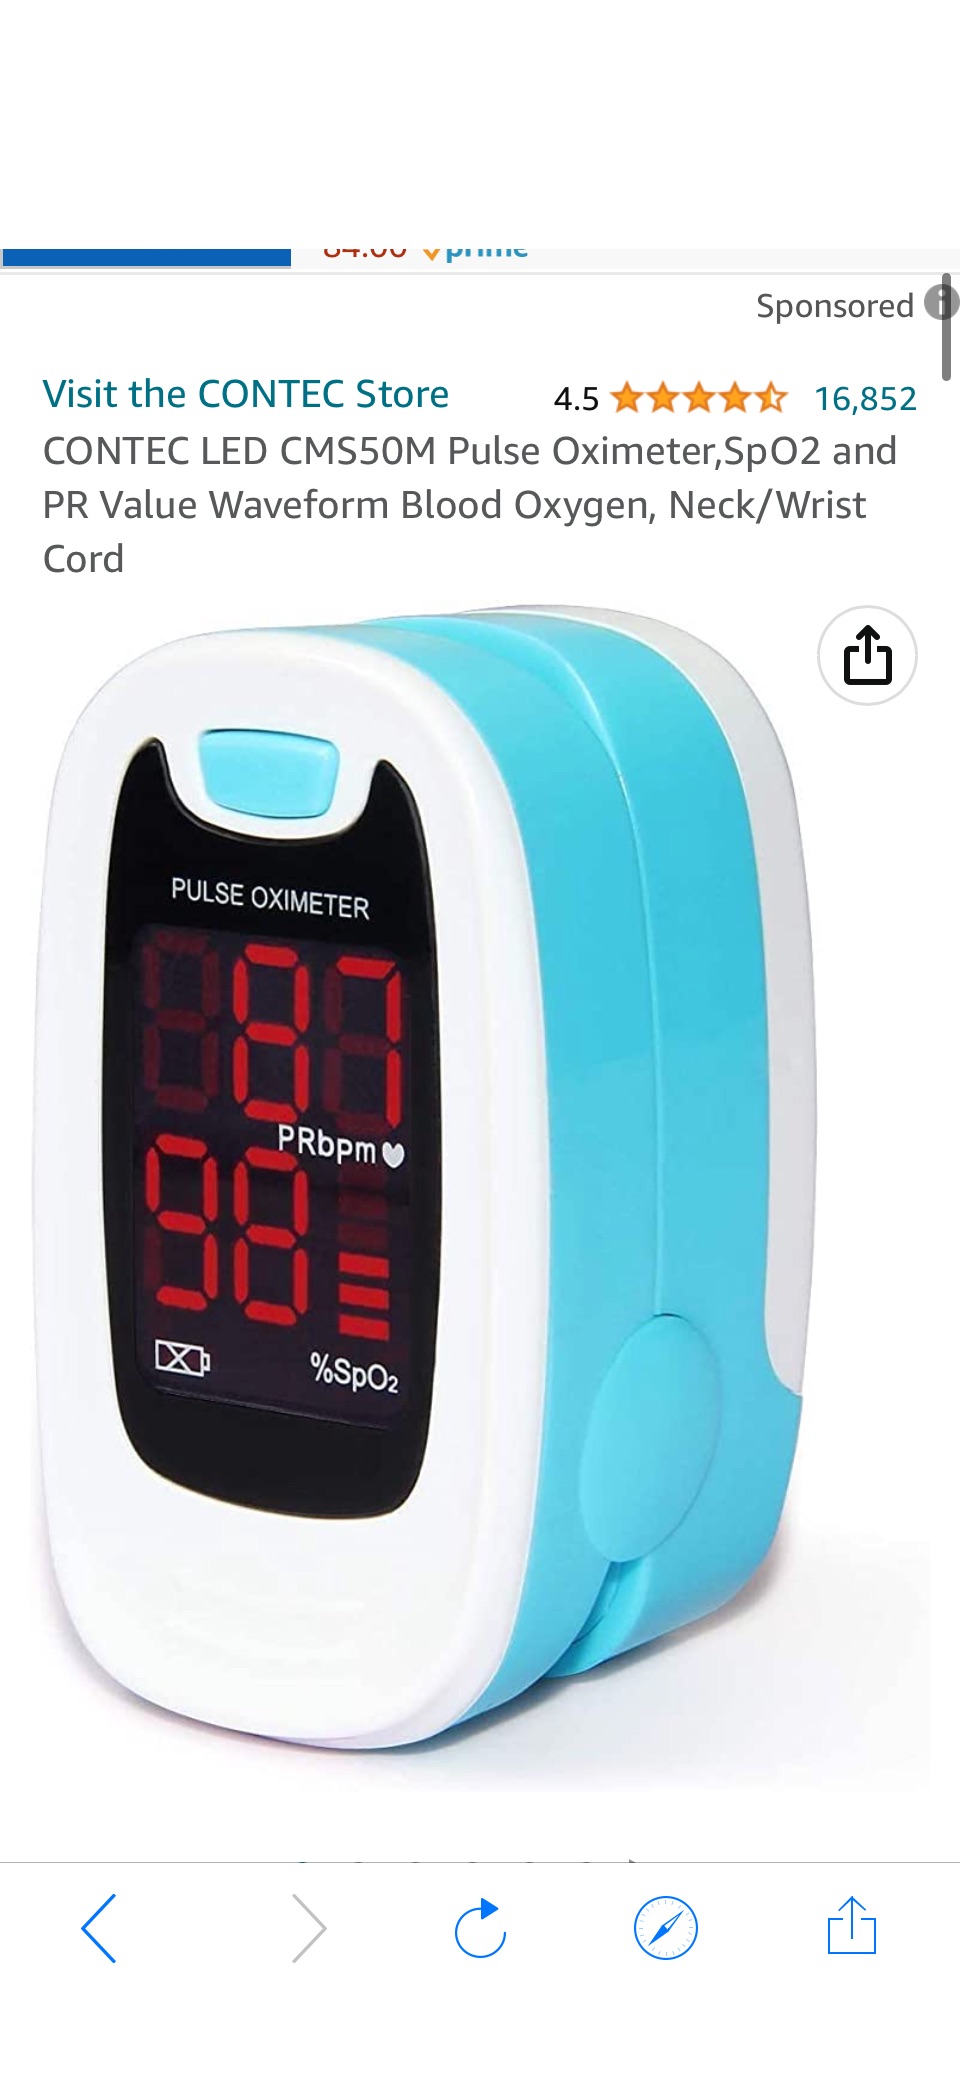 Amazon.com: CONTEC LED CMS50M Pulse Oximeter,SpO2 and PR Value Waveform Blood Oxygen, Neck/Wrist Cord : Health & Household原价19.99